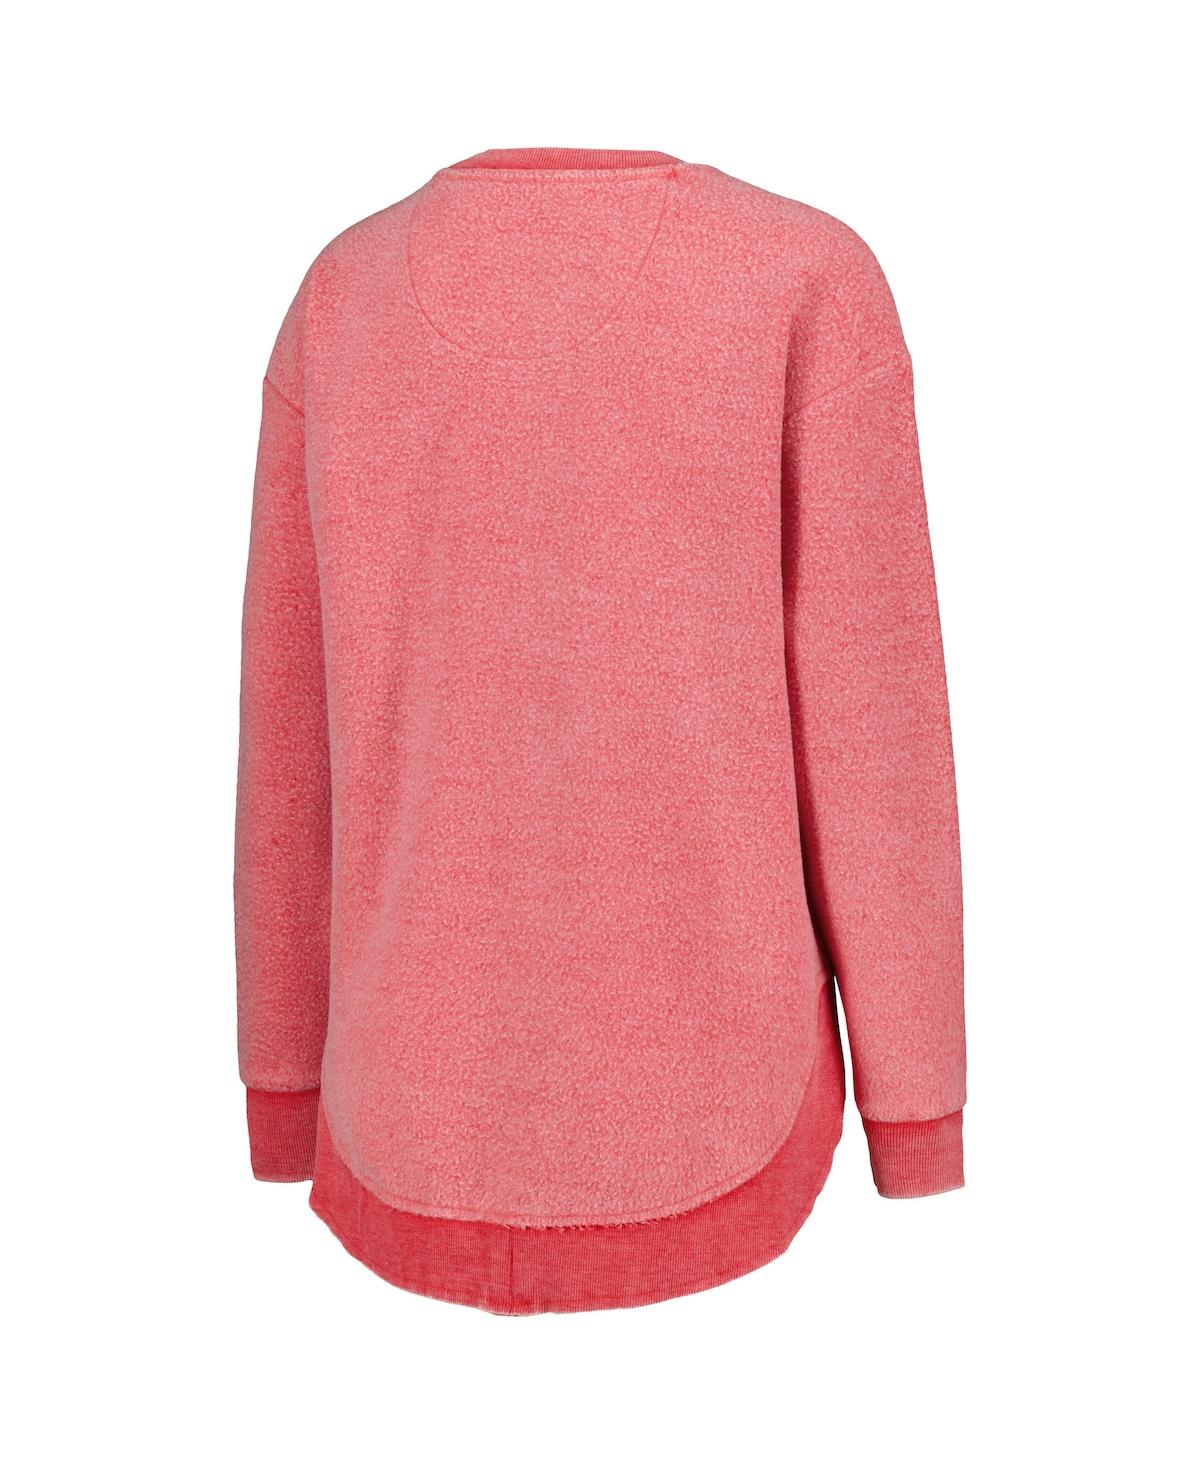 Shop Pressbox Women's  Scarlet Distressed Ohio State Buckeyes Ponchoville Pullover Sweatshirt